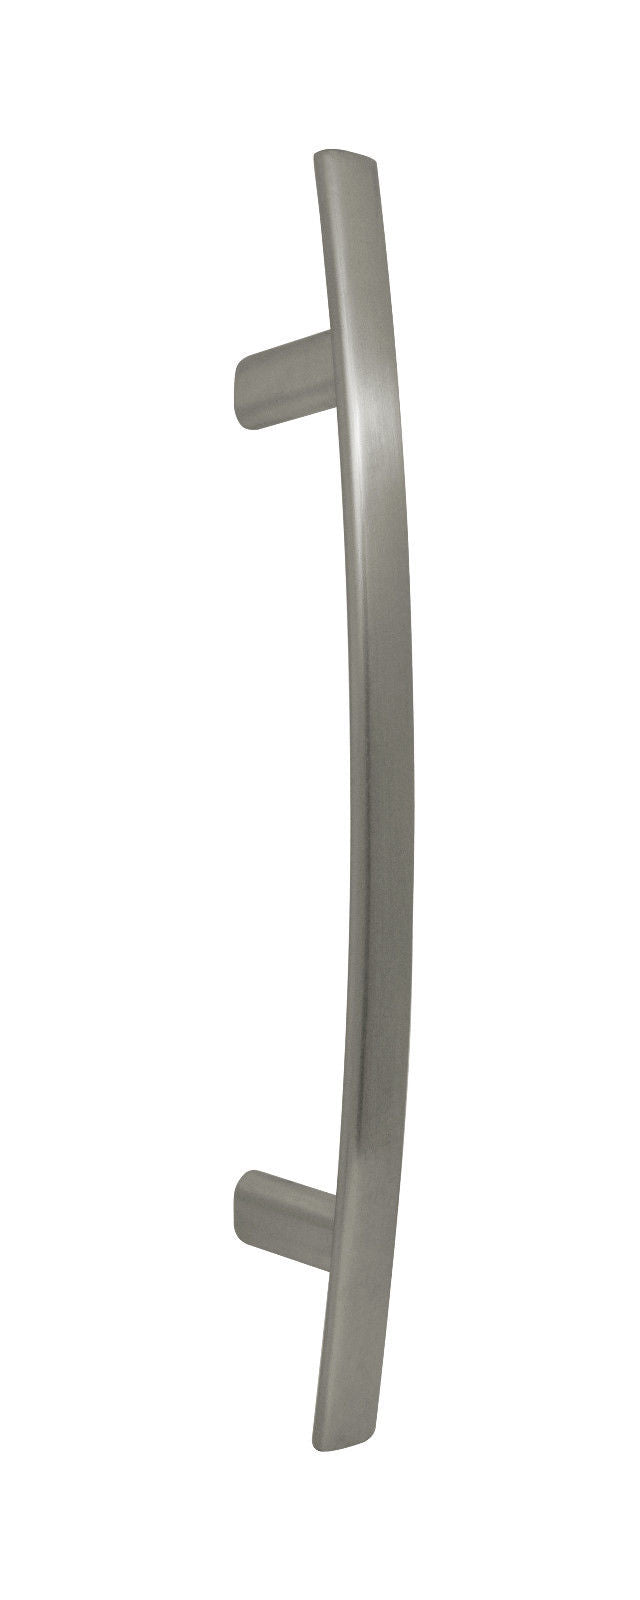 Silverline P2029 Long Arch Bar Pull Bow Appliance Handle CC: 128 mm ~ 5-1/16" - amerfithardware